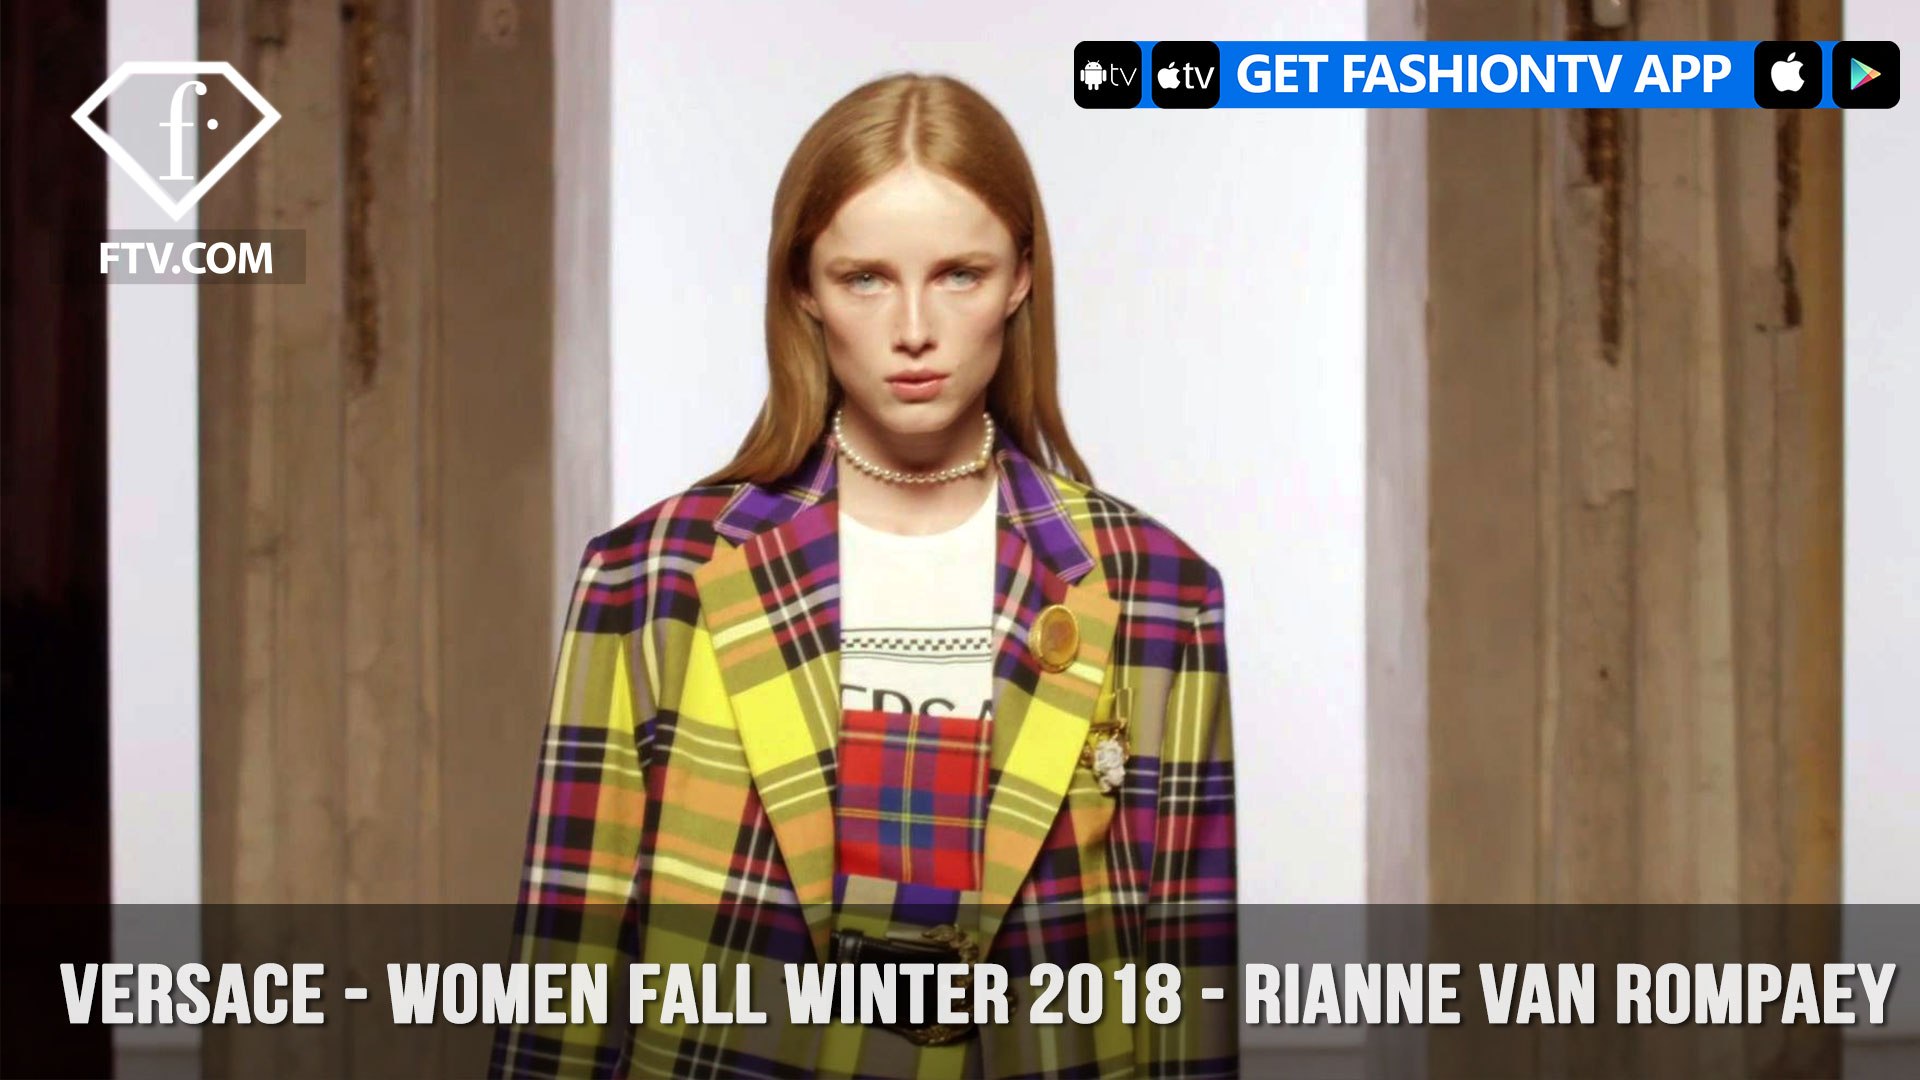 Versace Presents Rianne Van Rompaey For Women Fall Winter